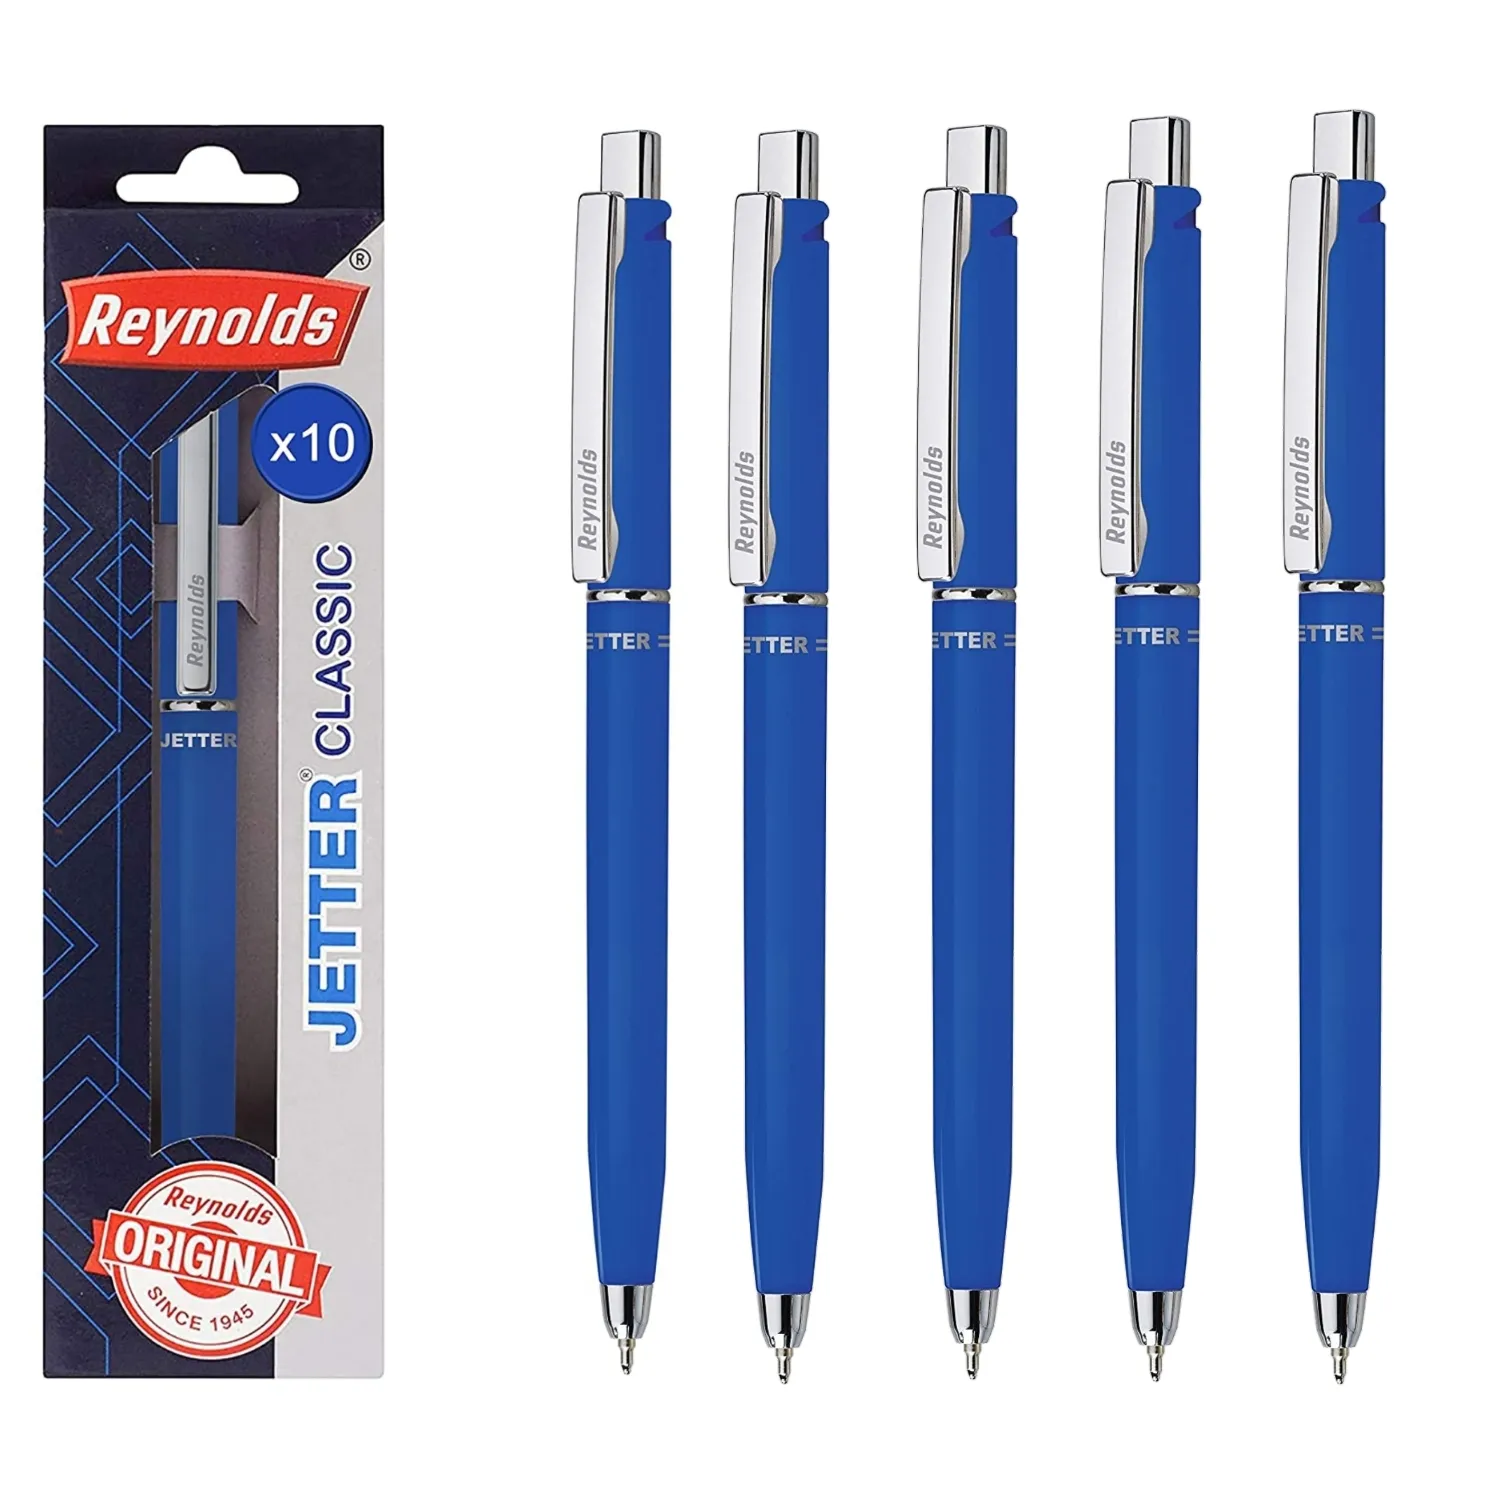 Reynolds Jetter Classic Ball Pen Blue Pack of 5